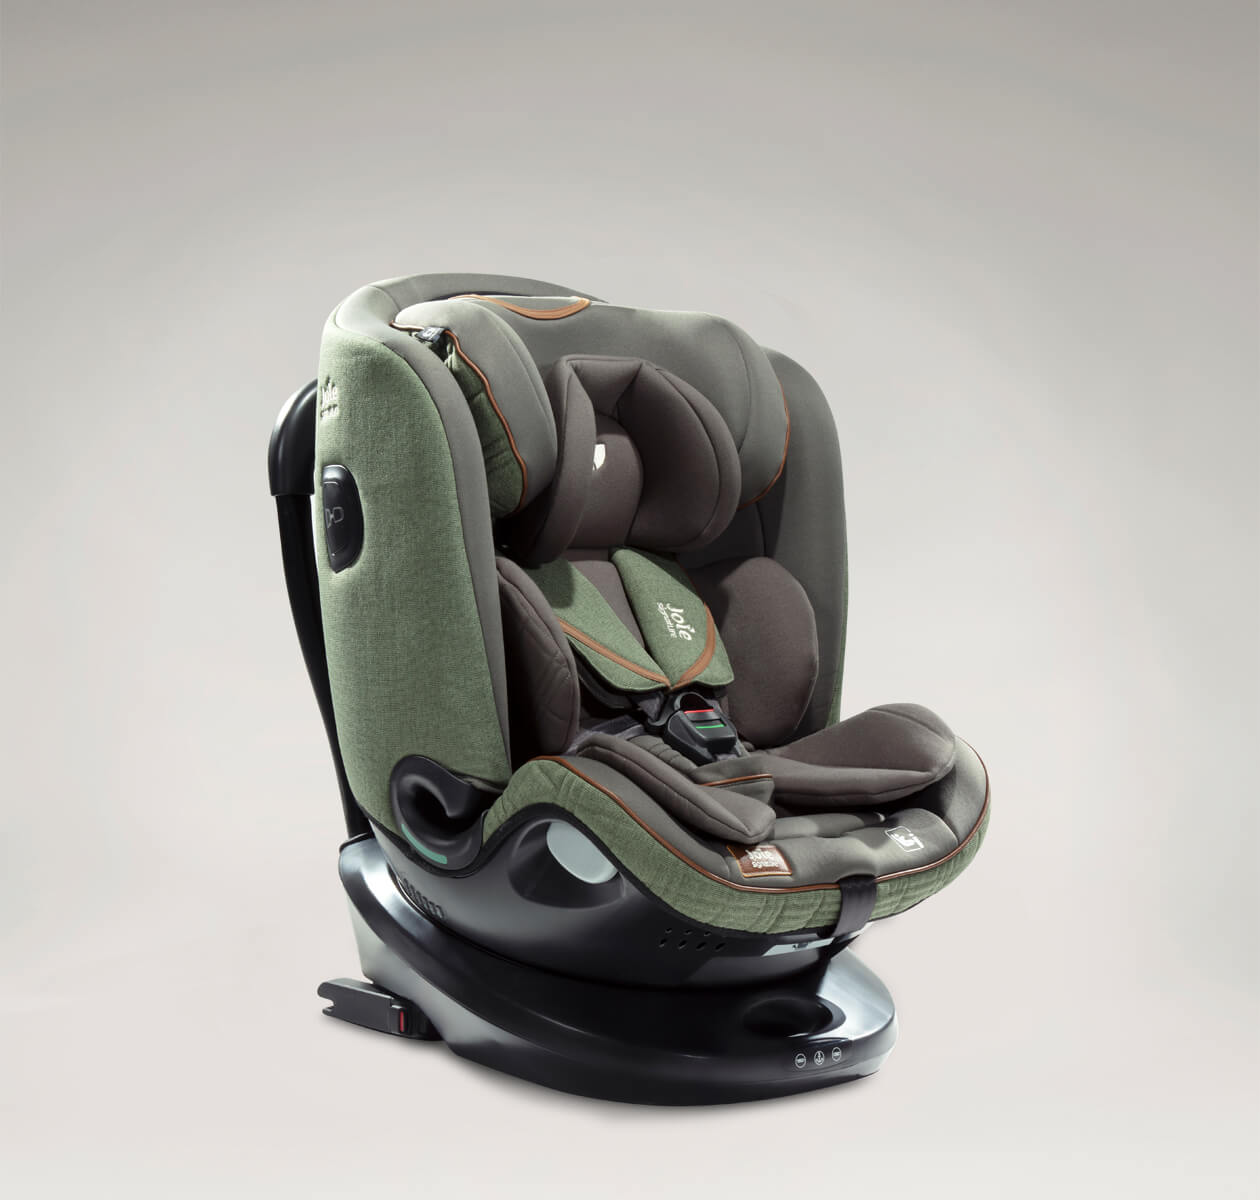 Joie i-Spin™ 360 Car Seat - Shell Grey – Mamas & Papas UK